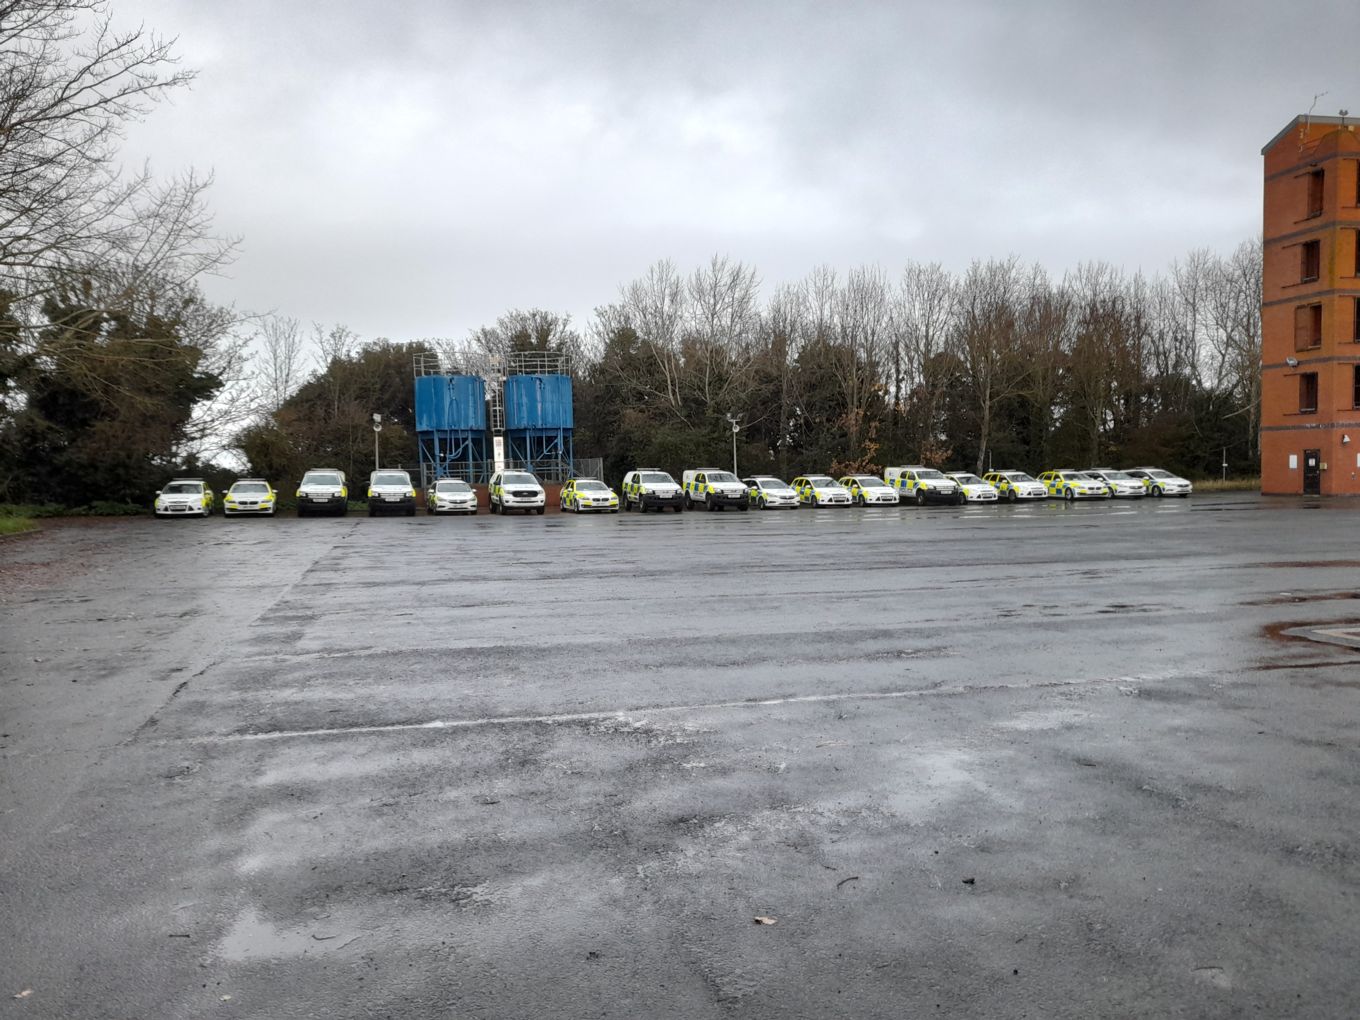 Kent Police vehicles in Marston carpark.